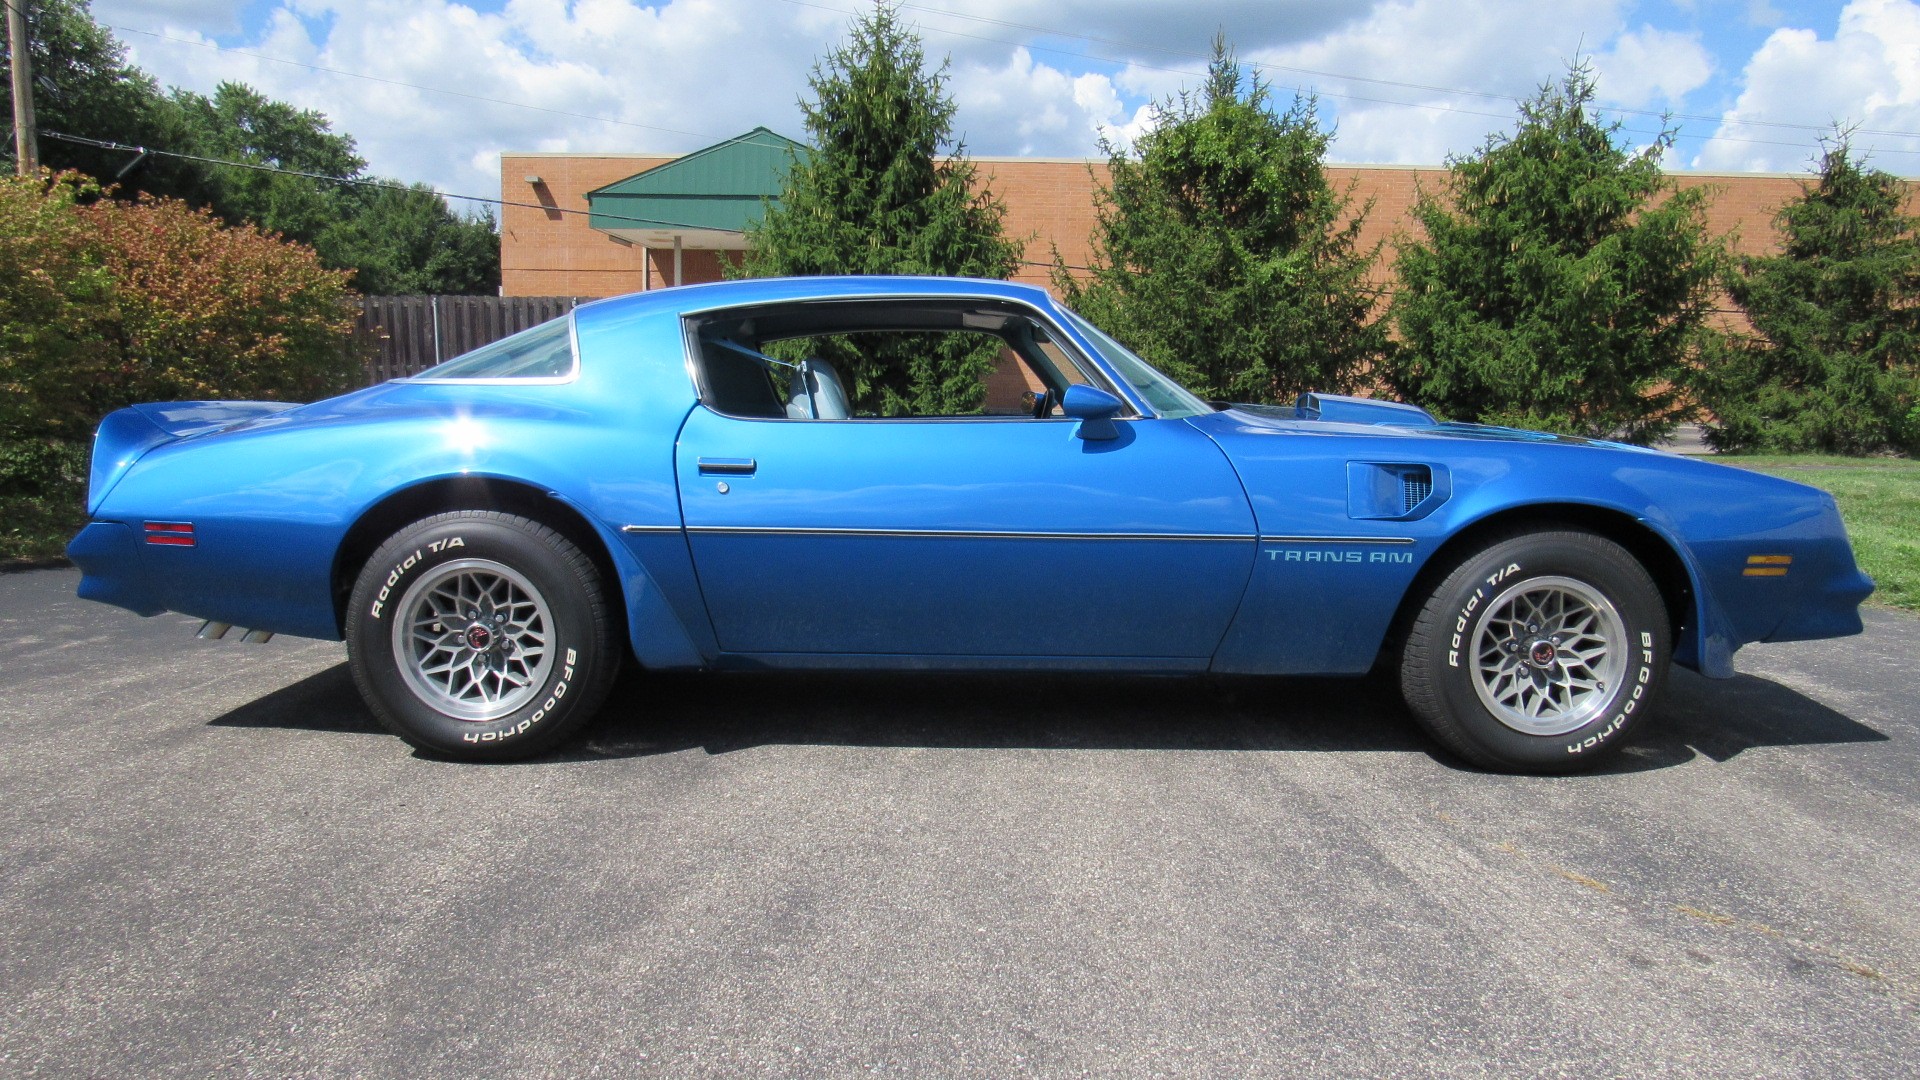 1978 Pontiac TA, 403 Auto, Martinique Blue, Restored, SOLD!